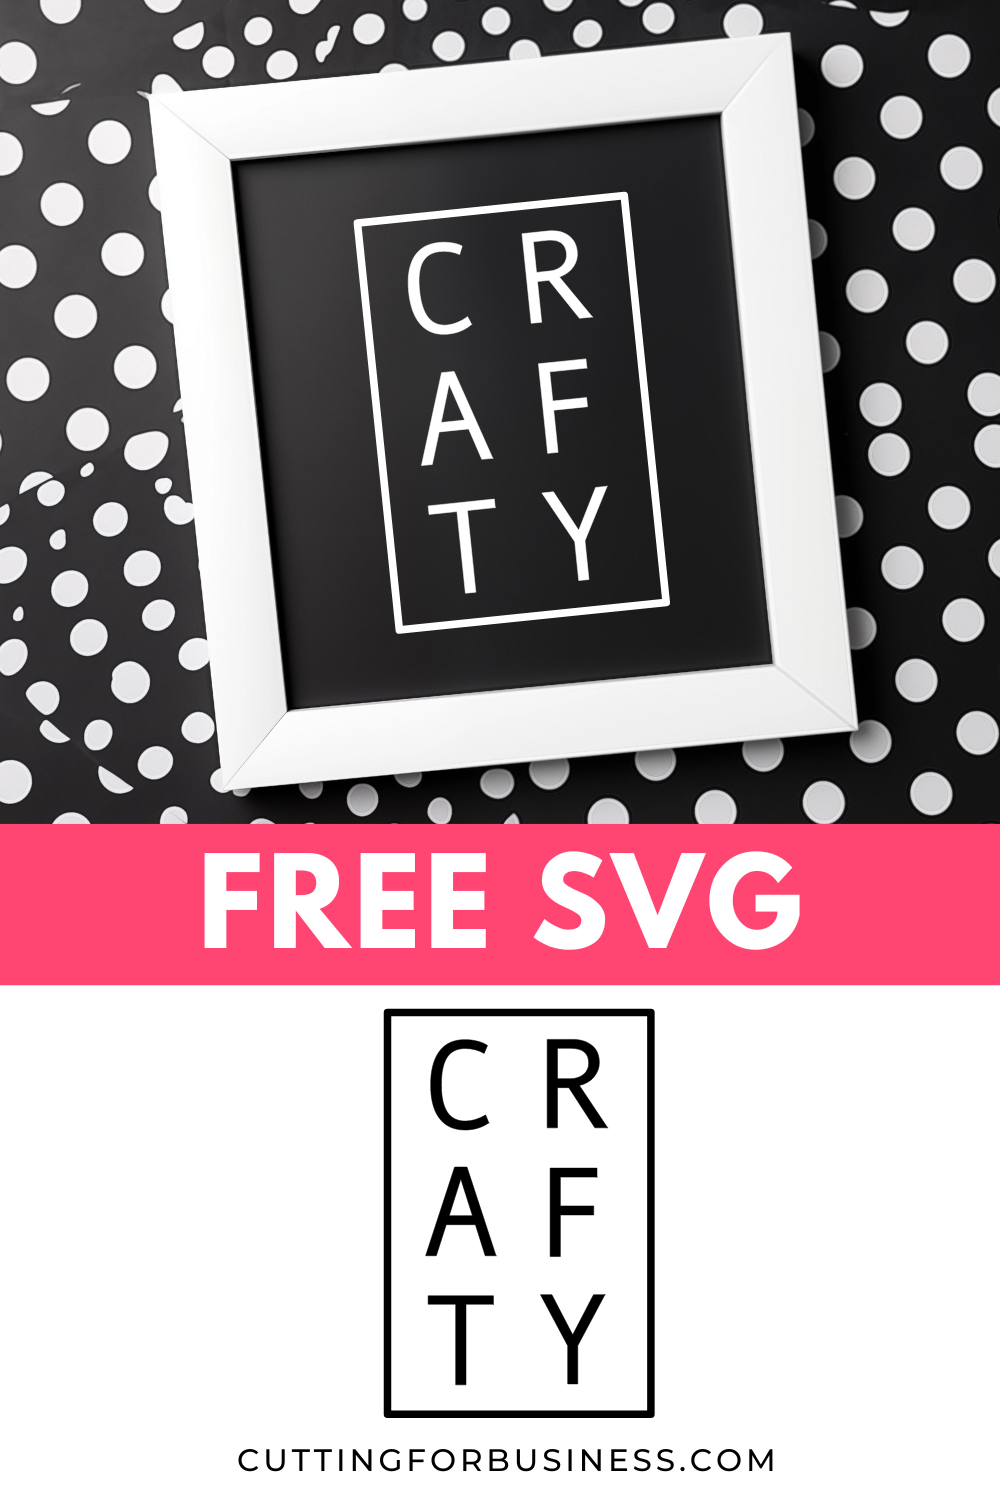 Free Crafty SVG - cuttingforbusiness.com